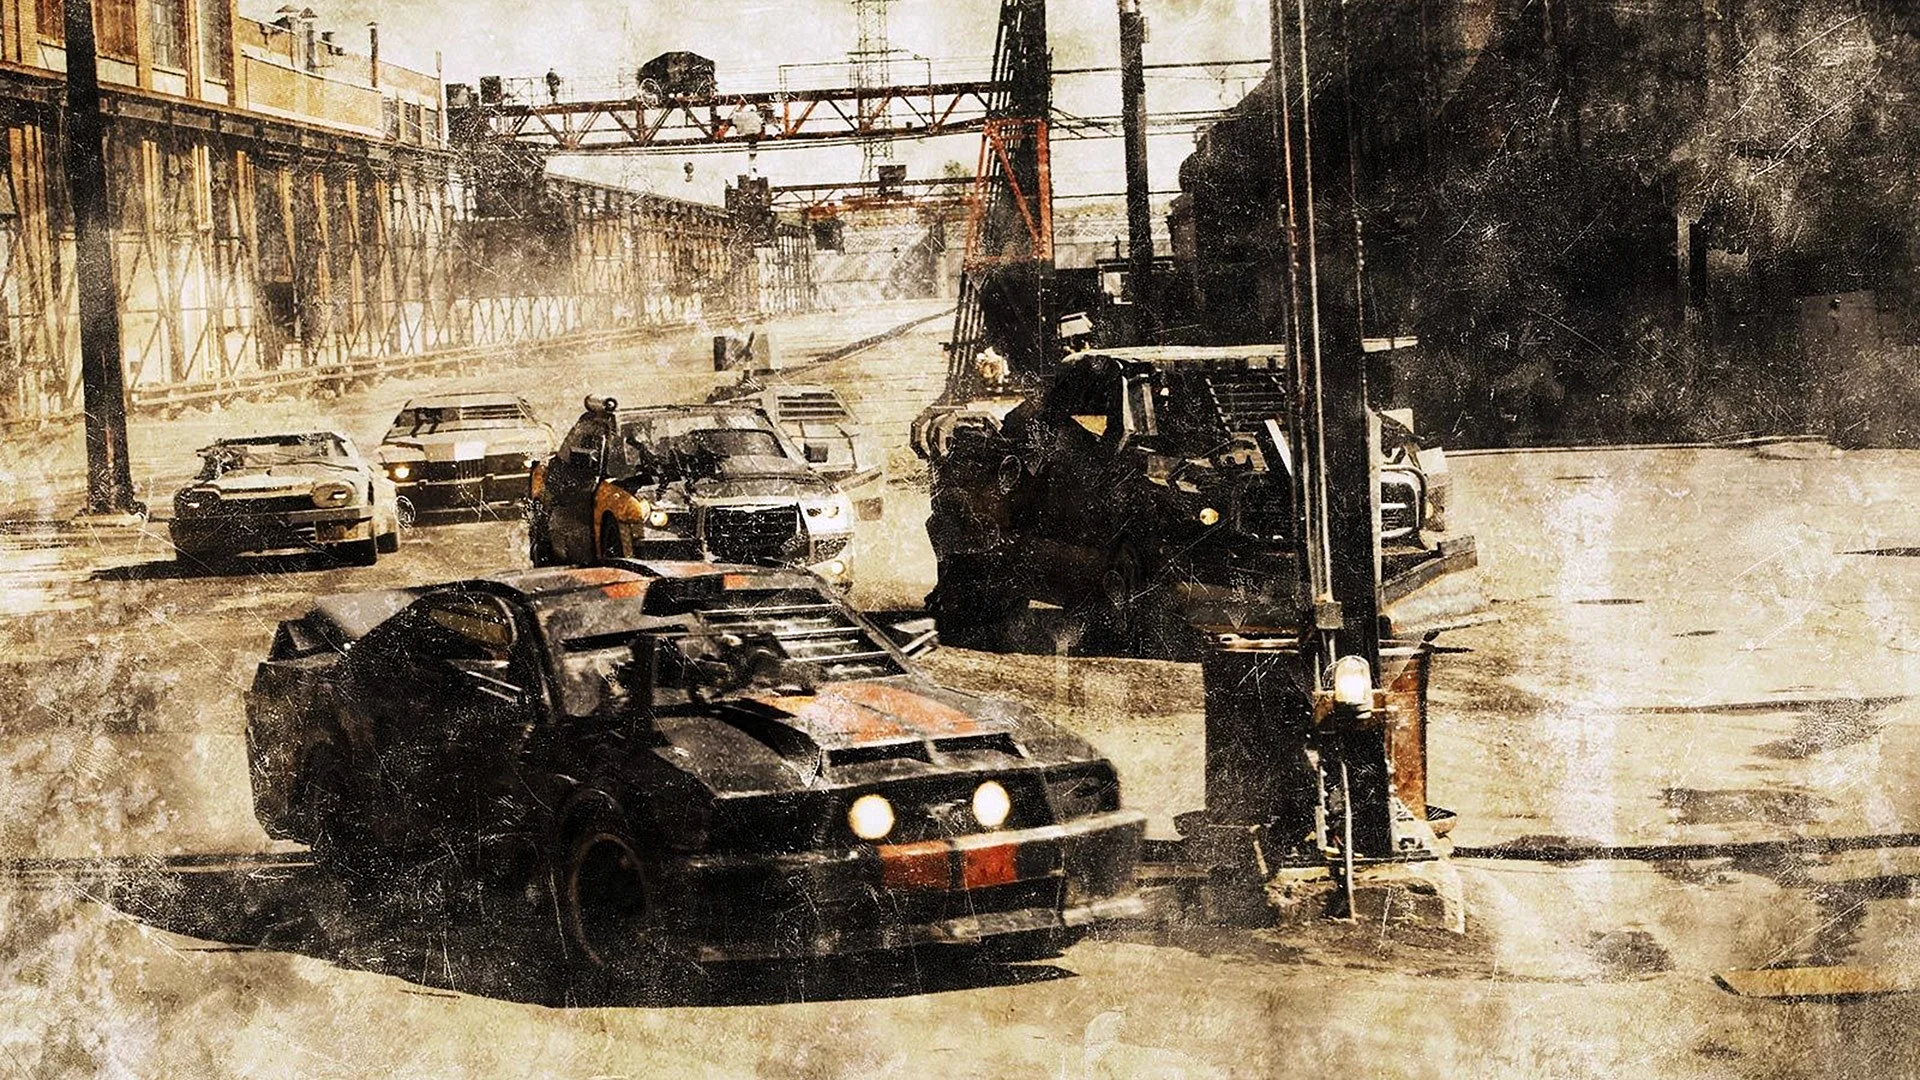 Death Race 2008 Cars Wallpaper